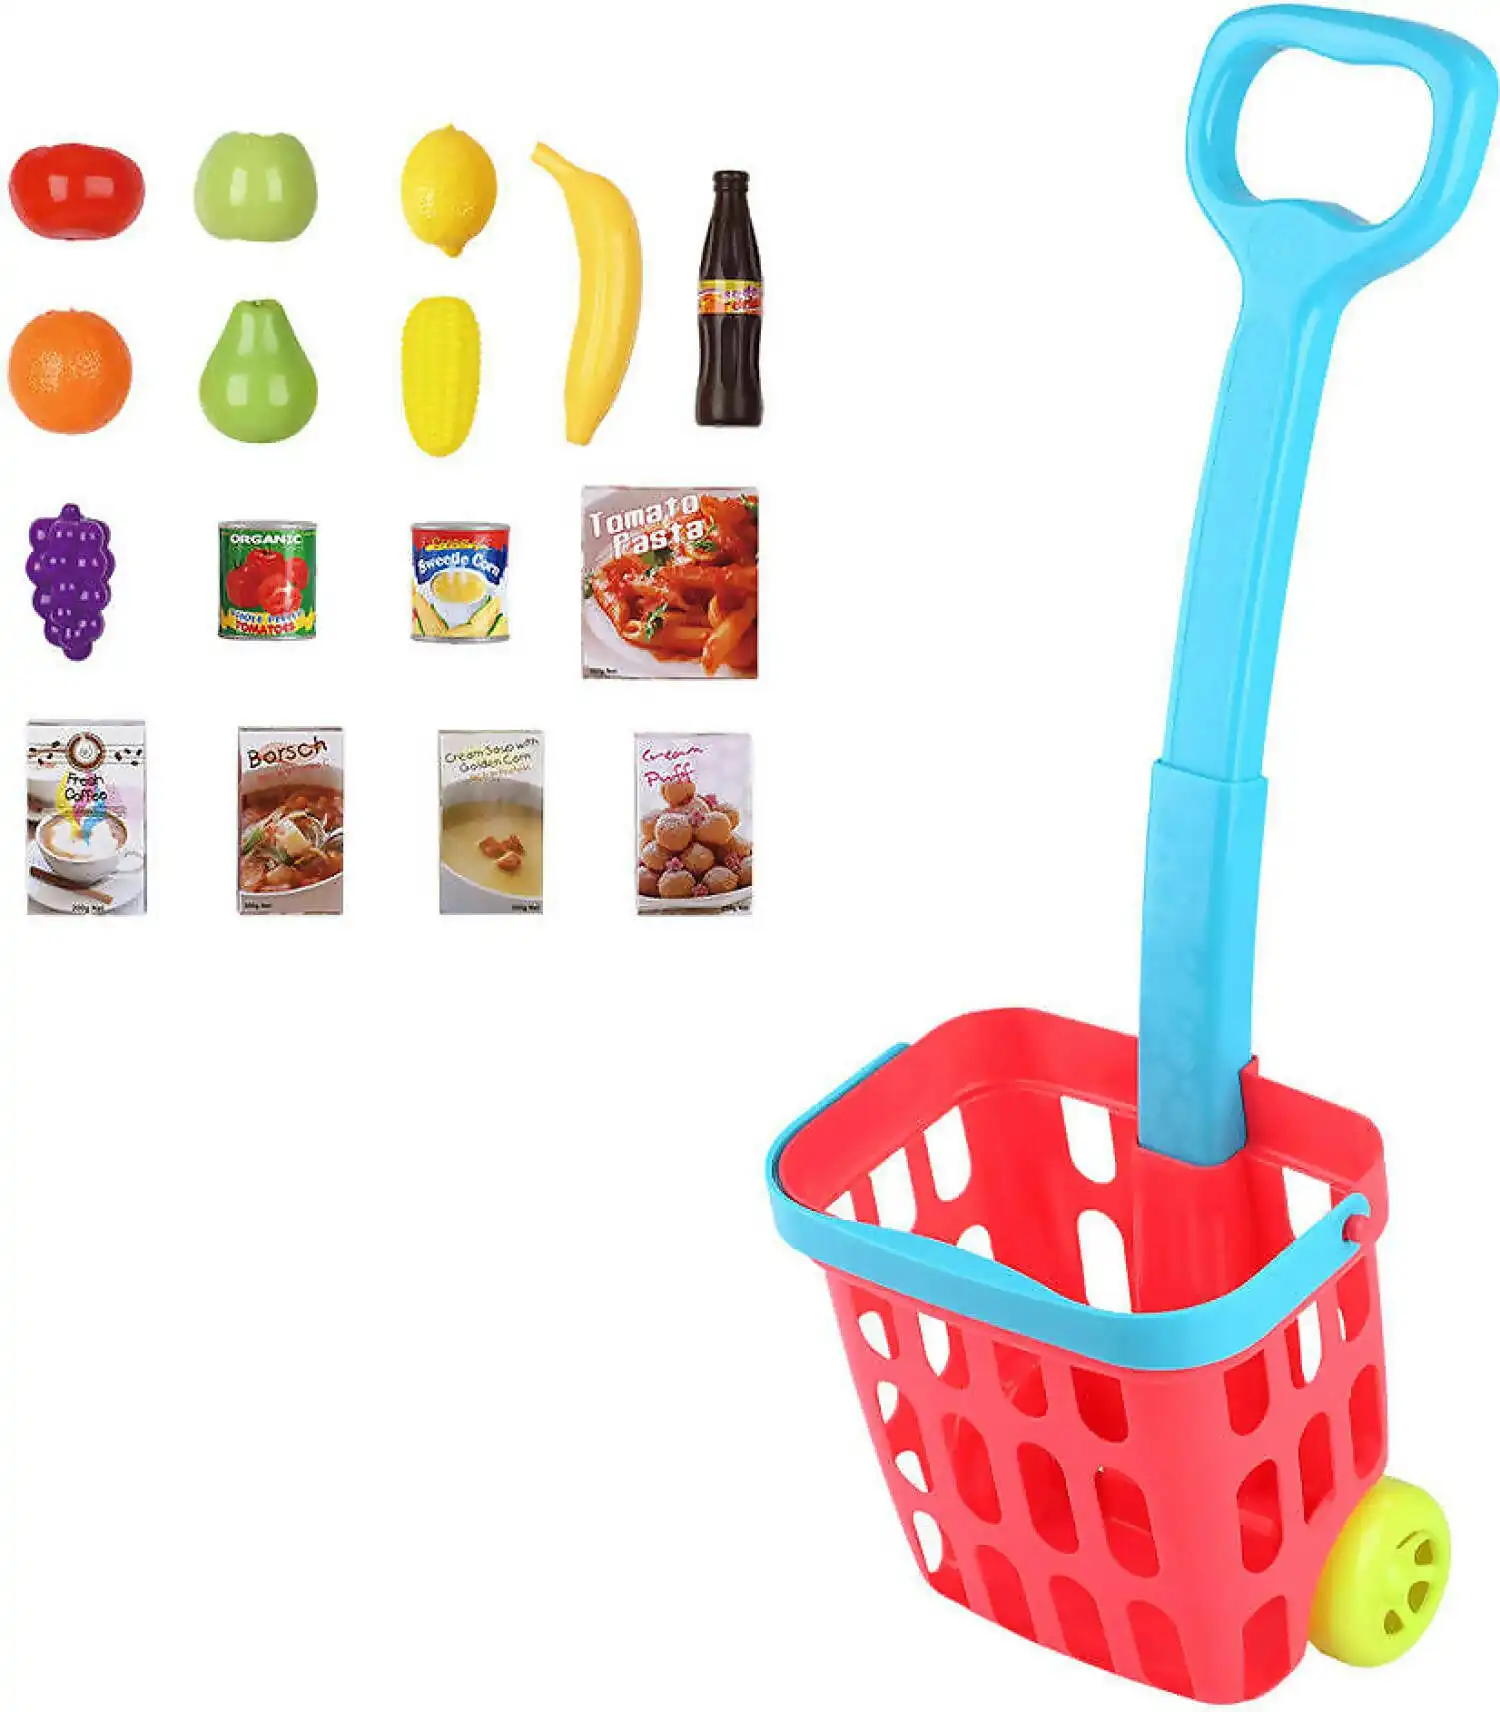 Playgo Toys Ent. Ltd. - Rolling Shopping Basket